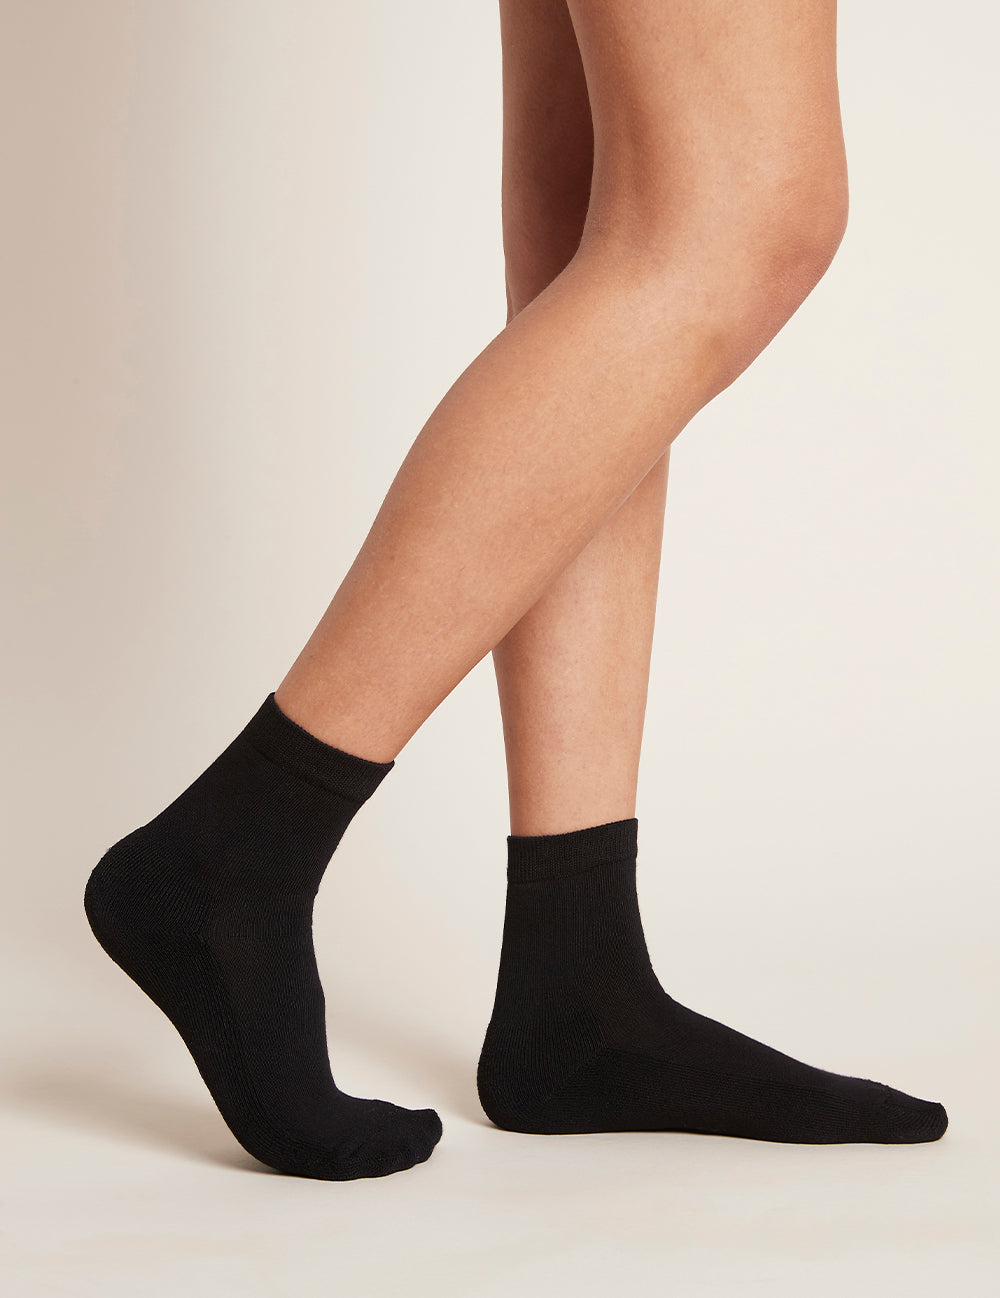 Women_s-Everyday-Ankle-Socks-2.0-Black-Side_3aea5e29-46ff-456a-bc6b-27285e02a417.jpg